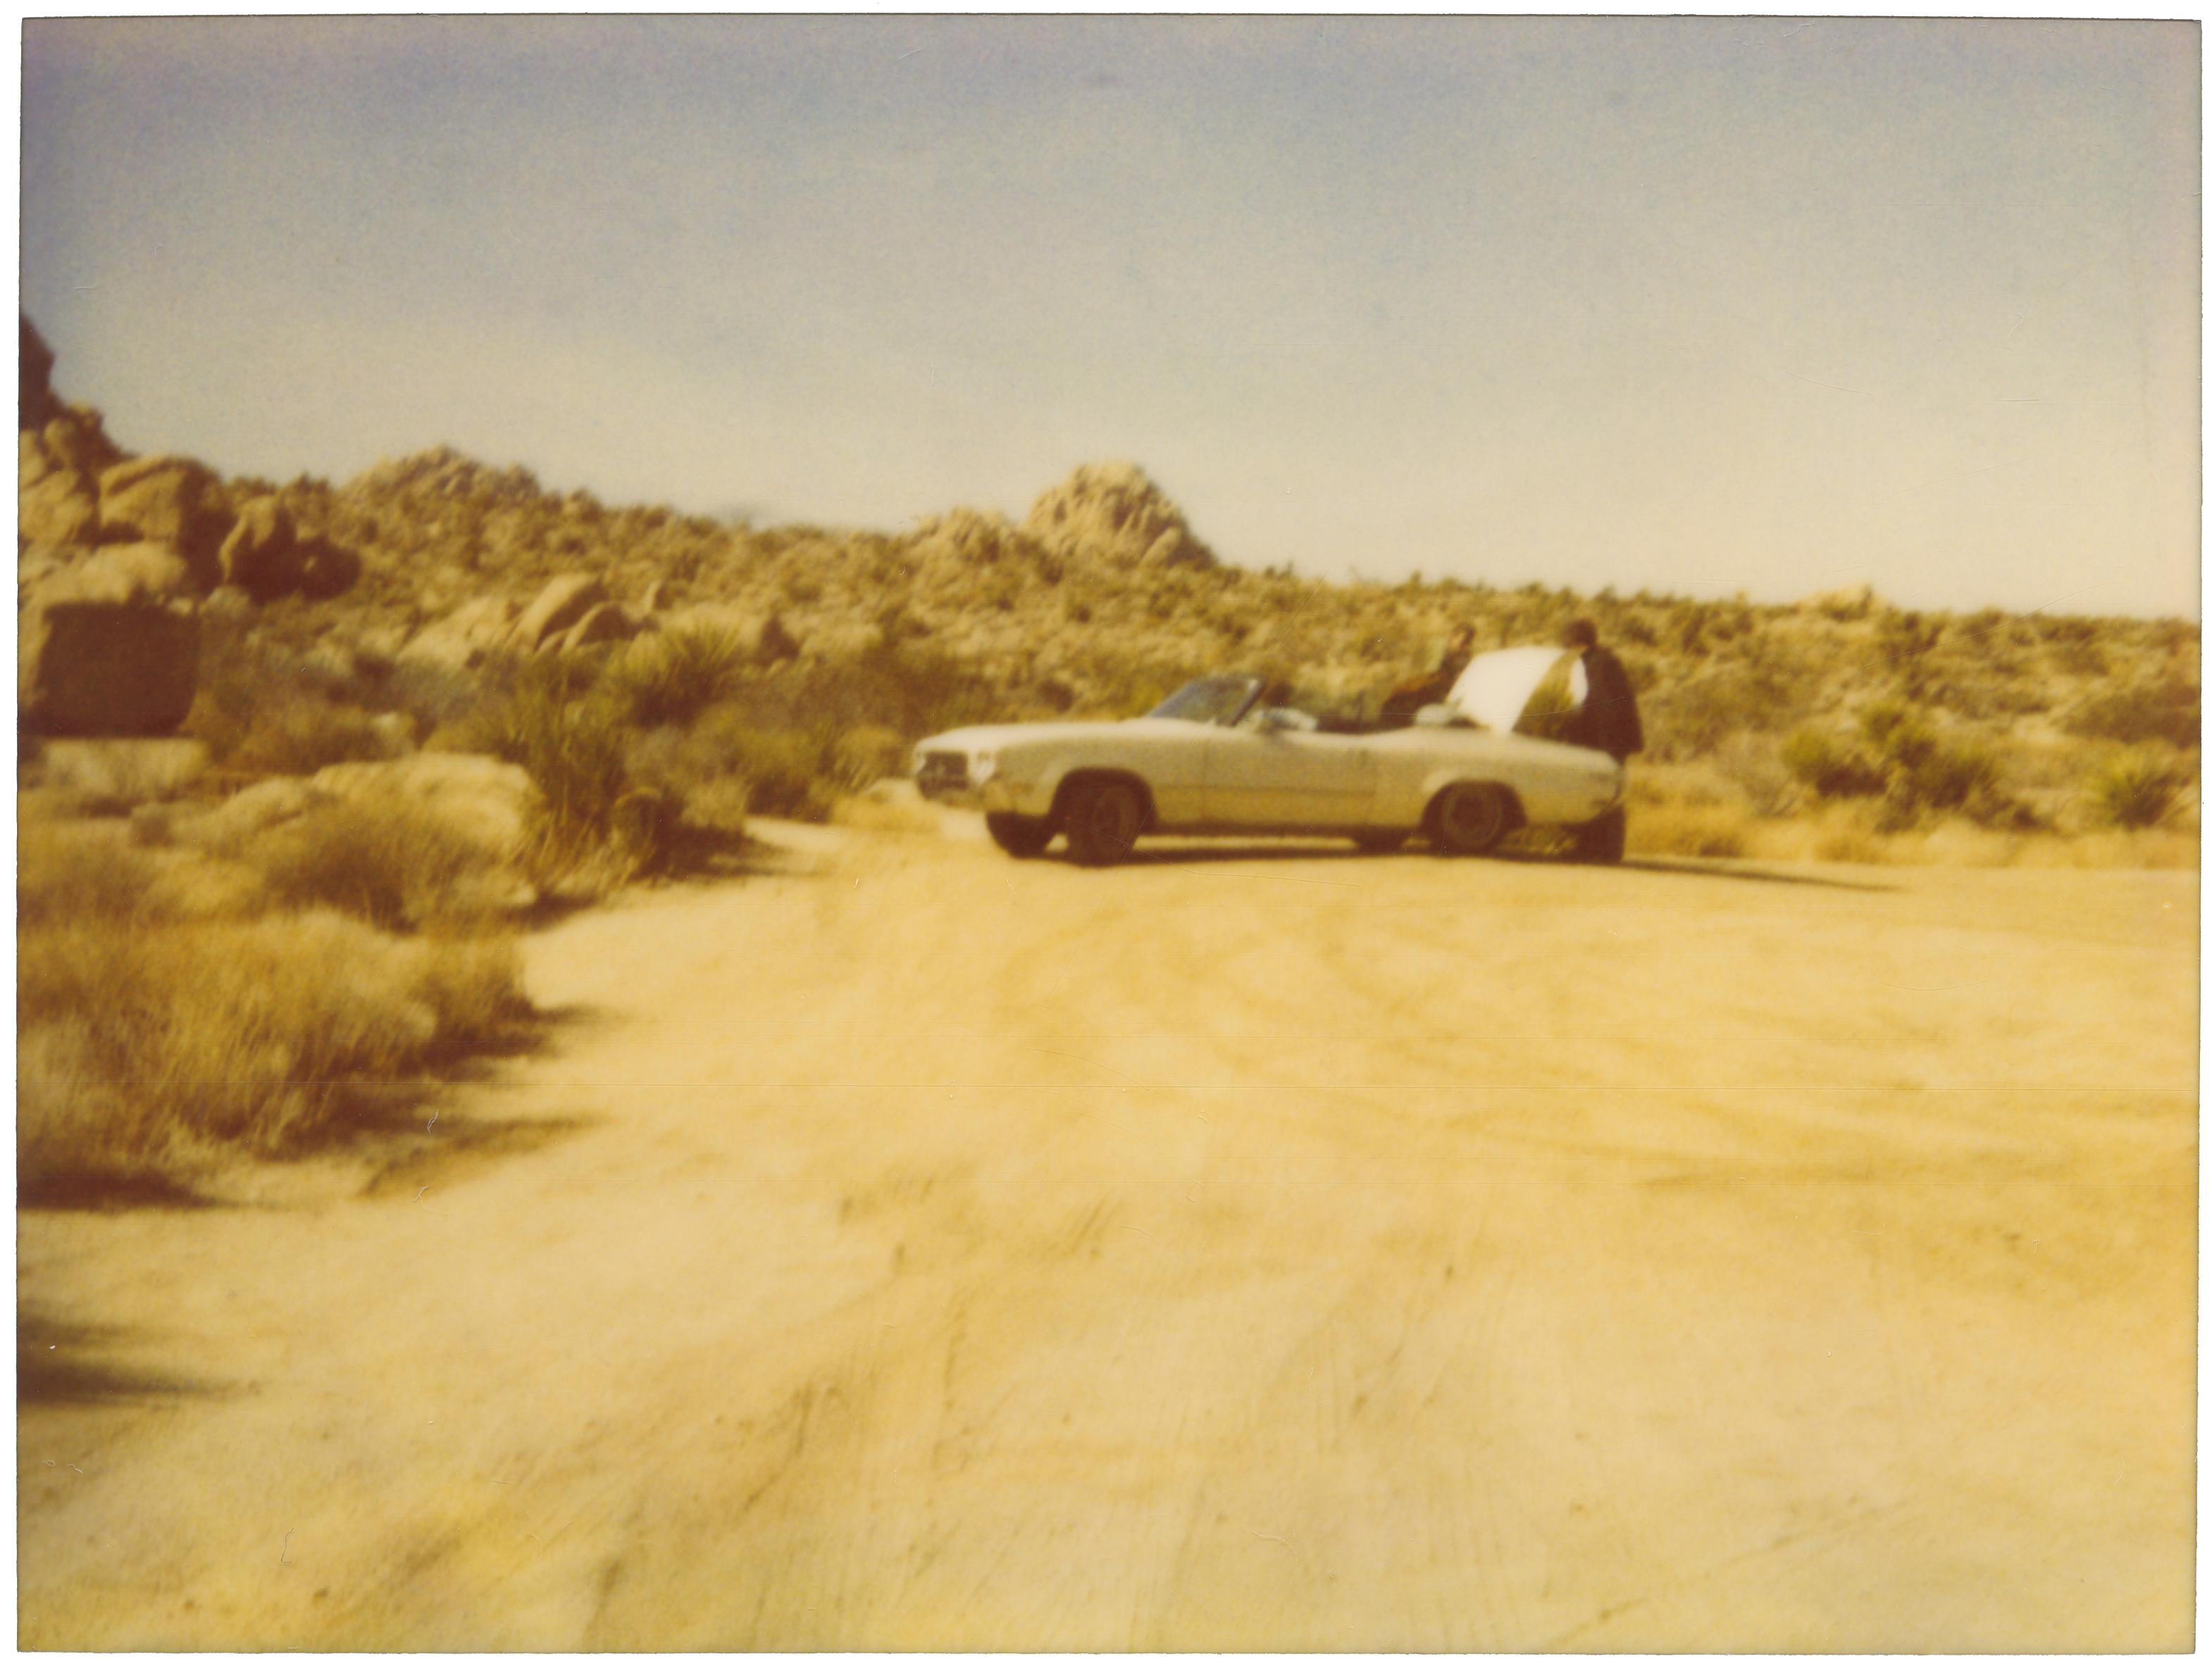 Stefanie Schneider Color Photograph - Skylark open trunk (Stranger than Paradise), analog, vintage 